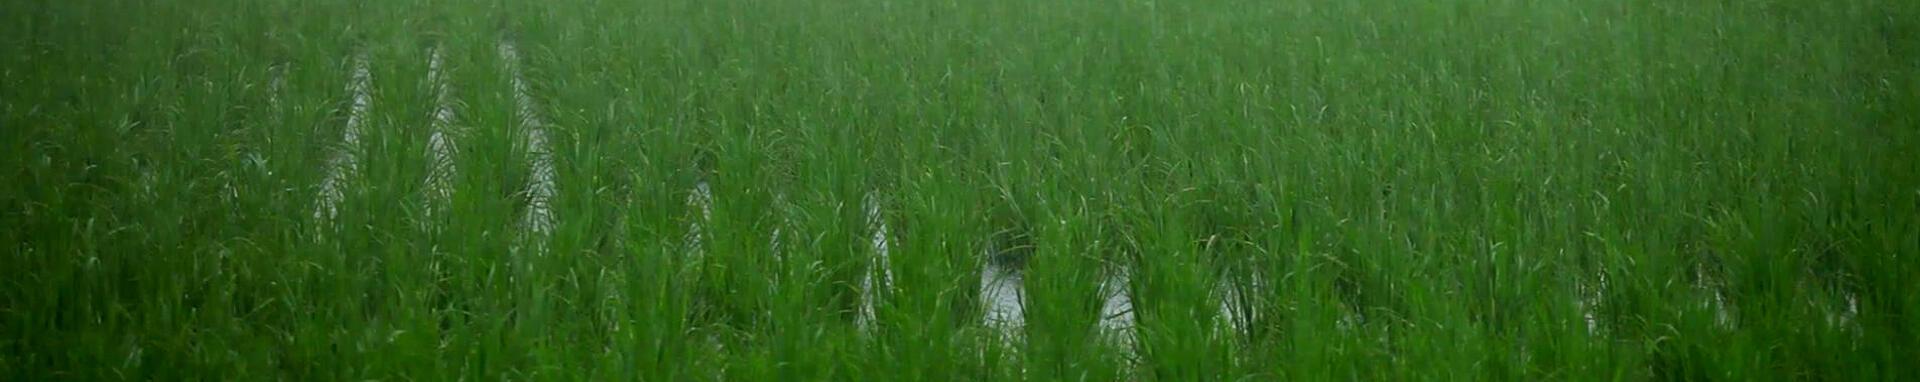 World Bank Photo Collection Rice field in southern Bangladesh, 2011. Video Still: Stephan Bachenheimer / World Bank